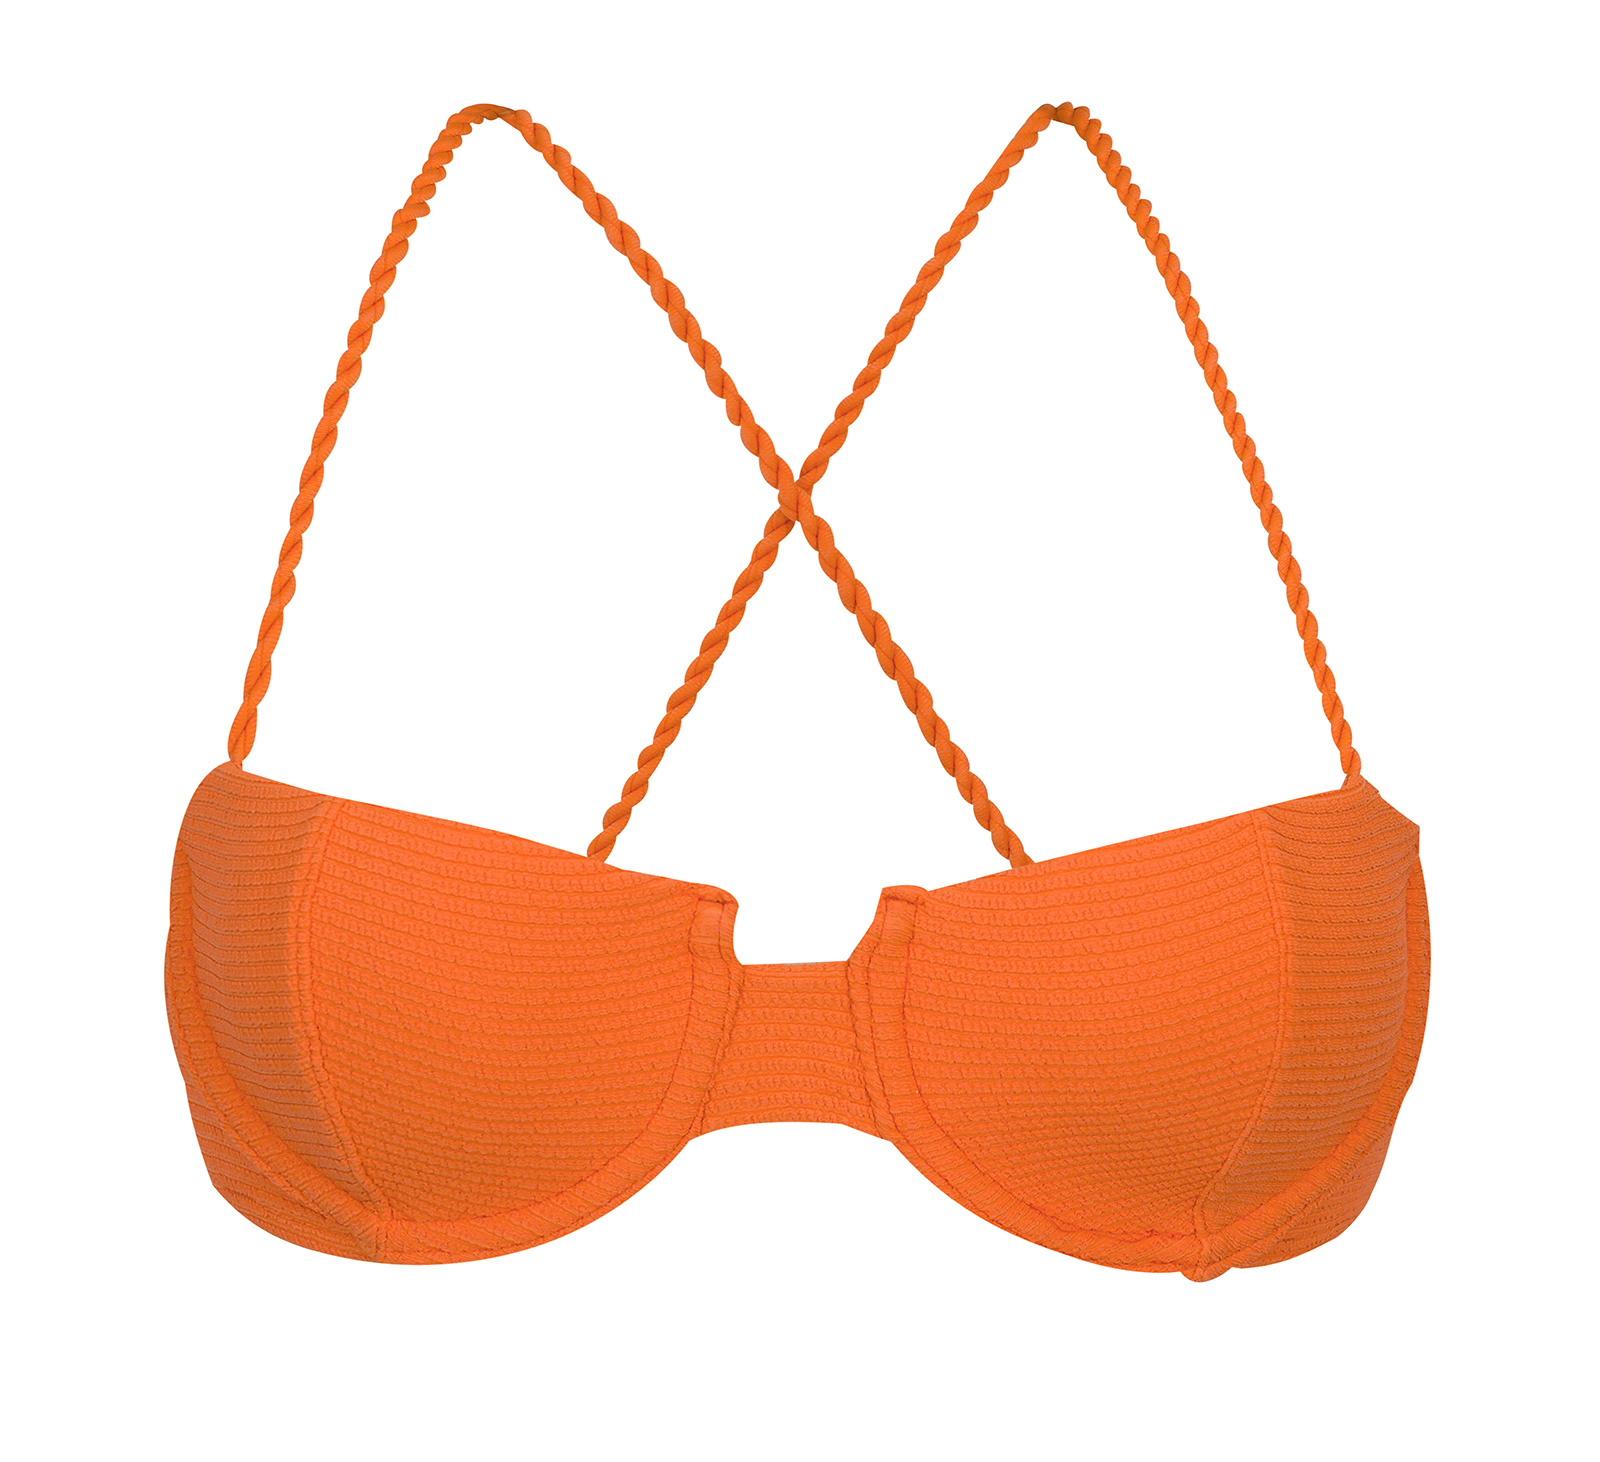 Textured Orange Balconette Top With Crossed Straps - Top St-tropez ...